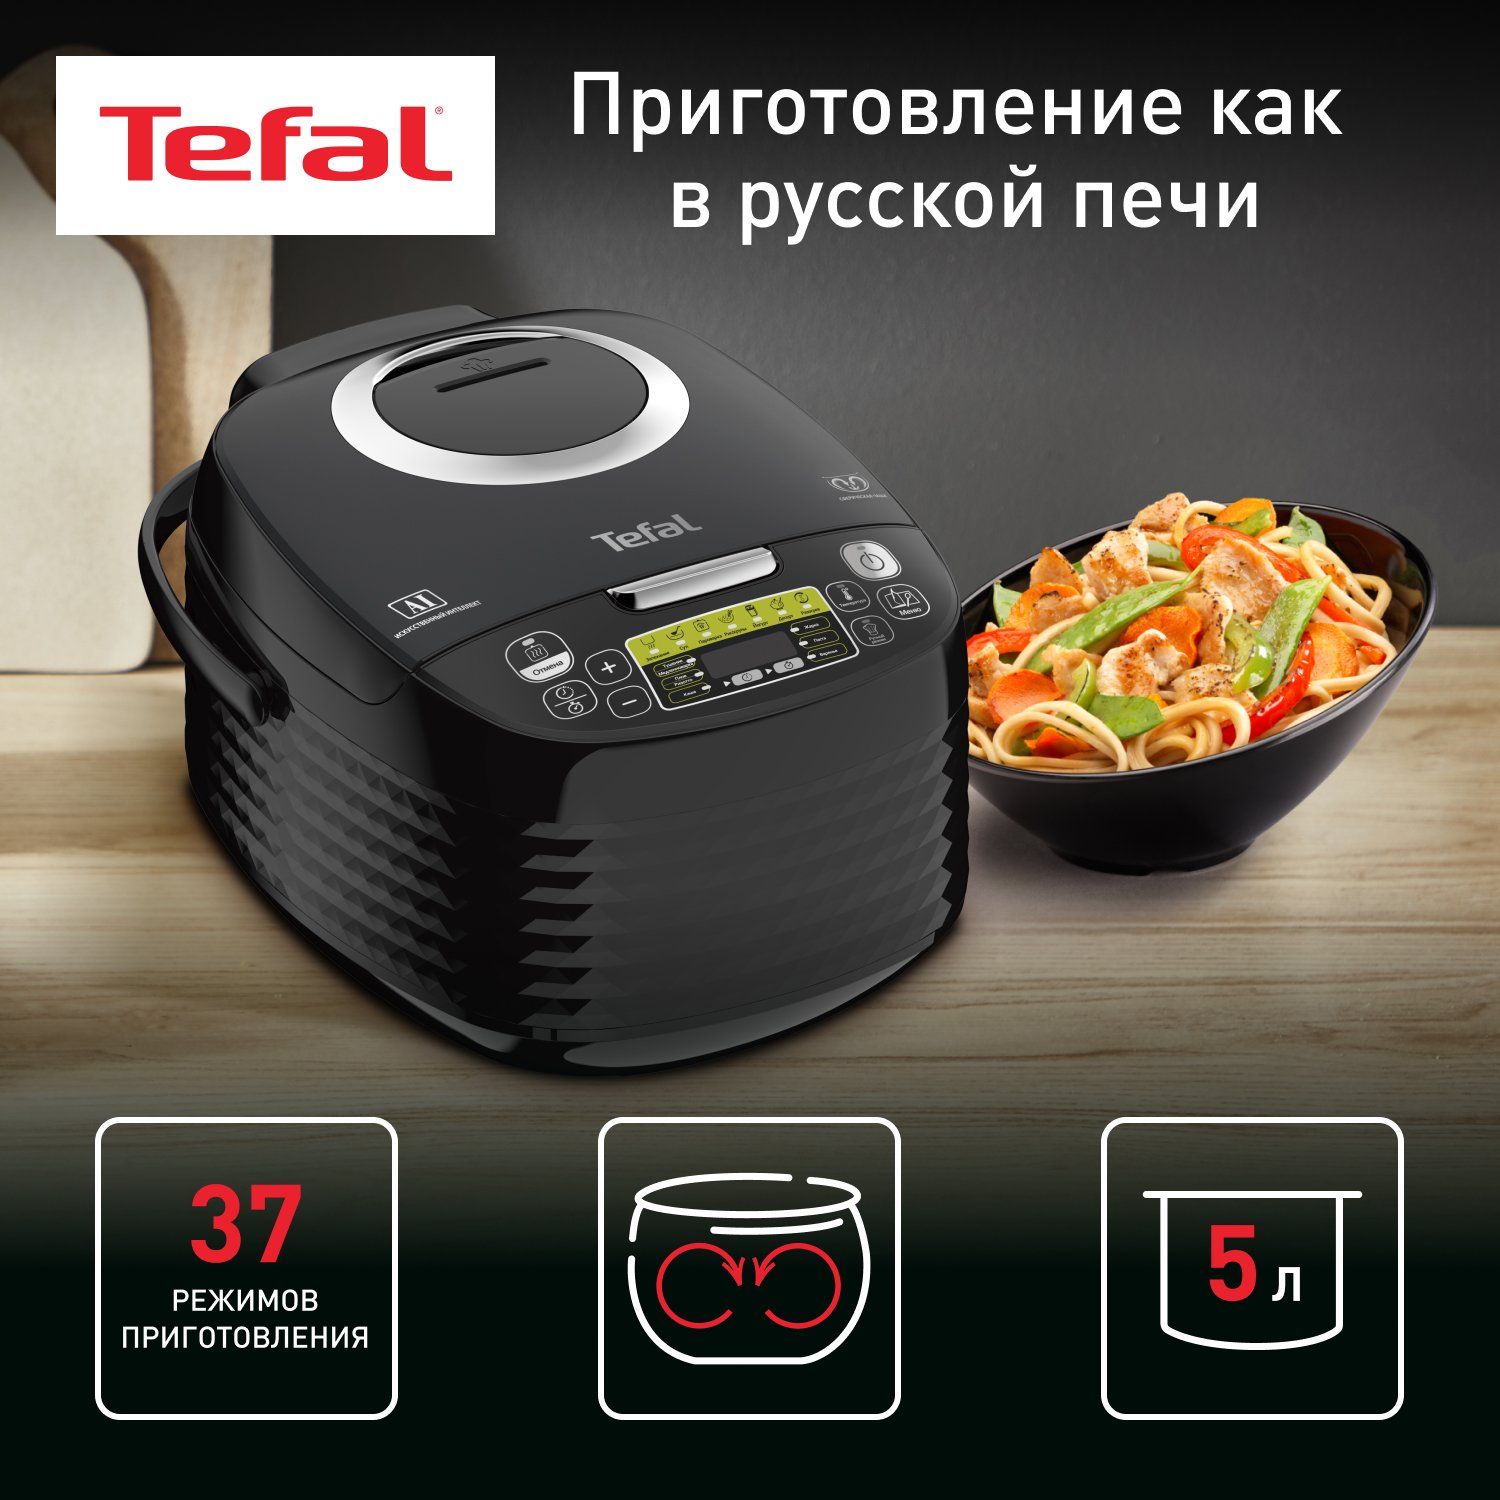 Мультиварка Tefal Effectual Multicooker RK745832, черный мультиварка tefal multi cook stir rk901832